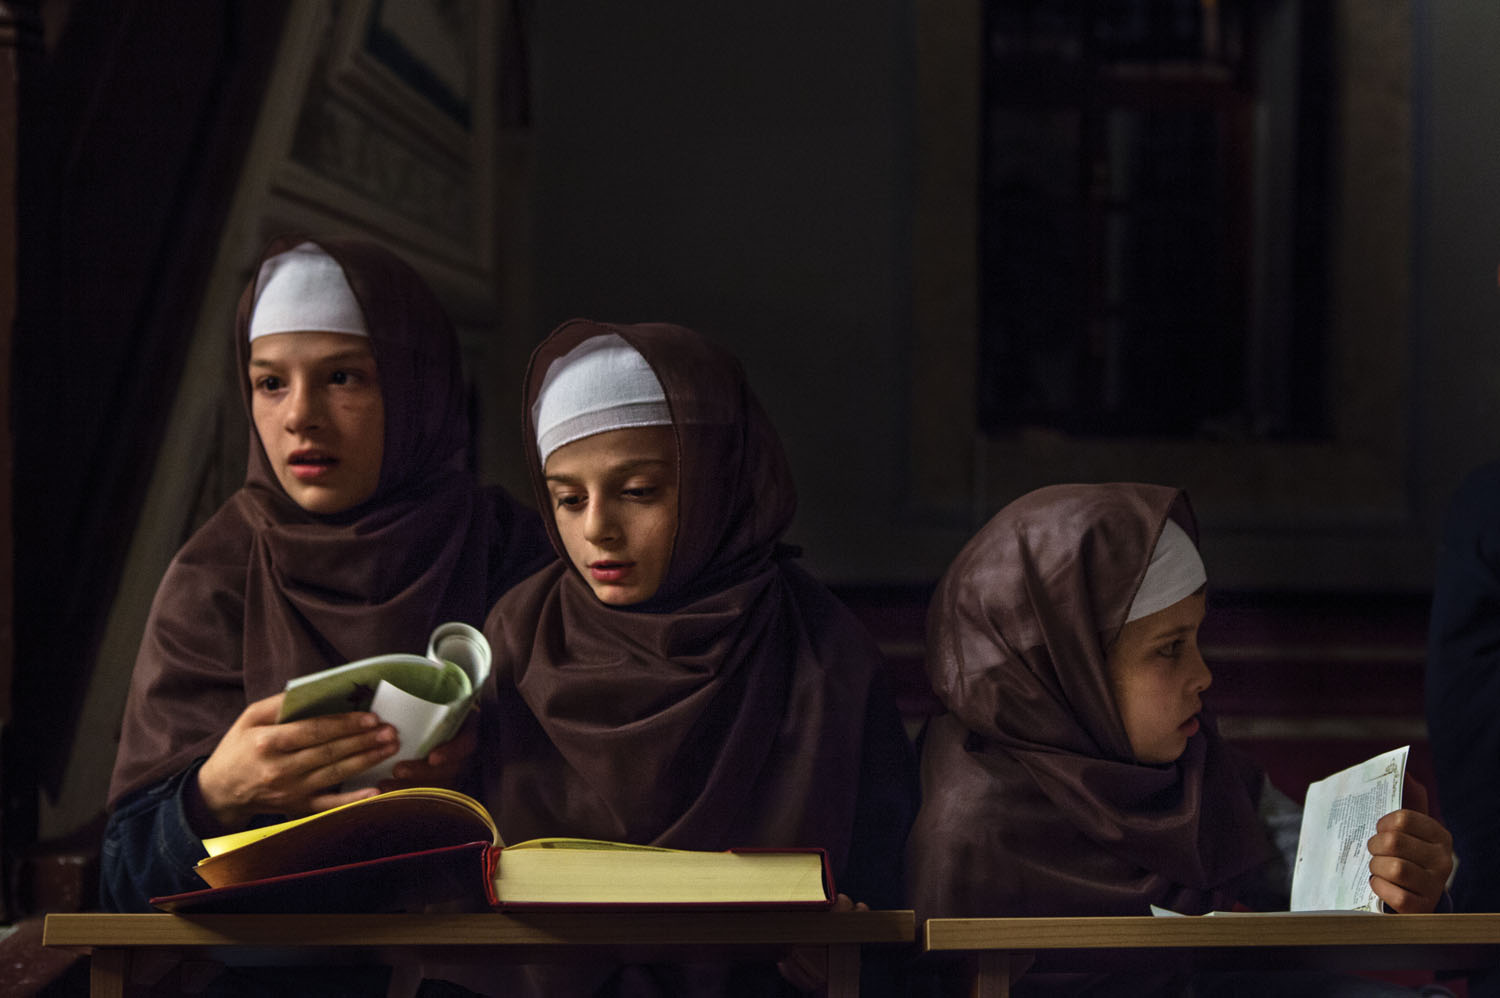 Albanian children studying the Koran. Kosovo. 2013.